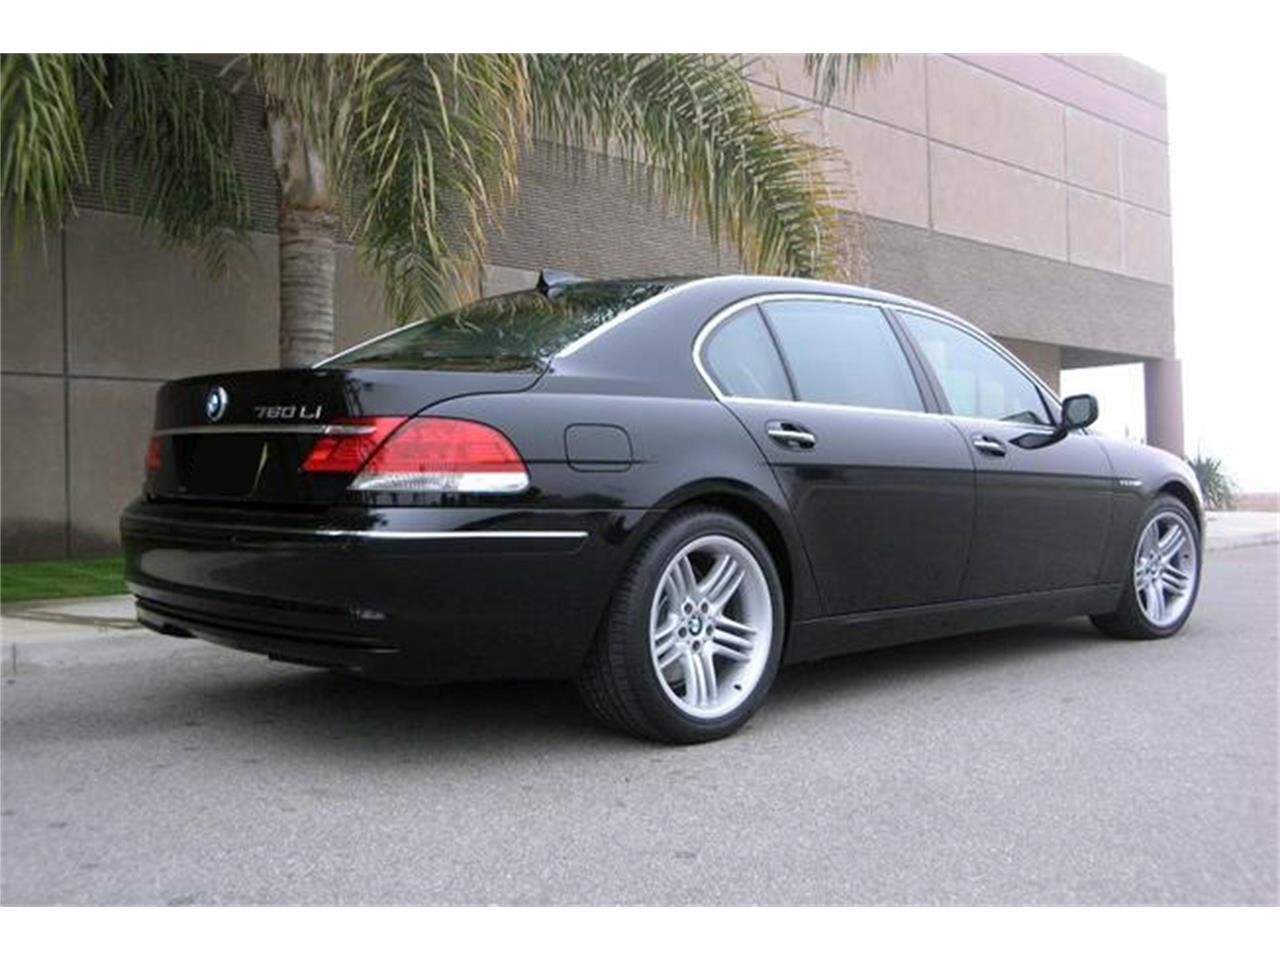 2008 BMW 760LI for Sale | ClassicCars.com | CC-1028017